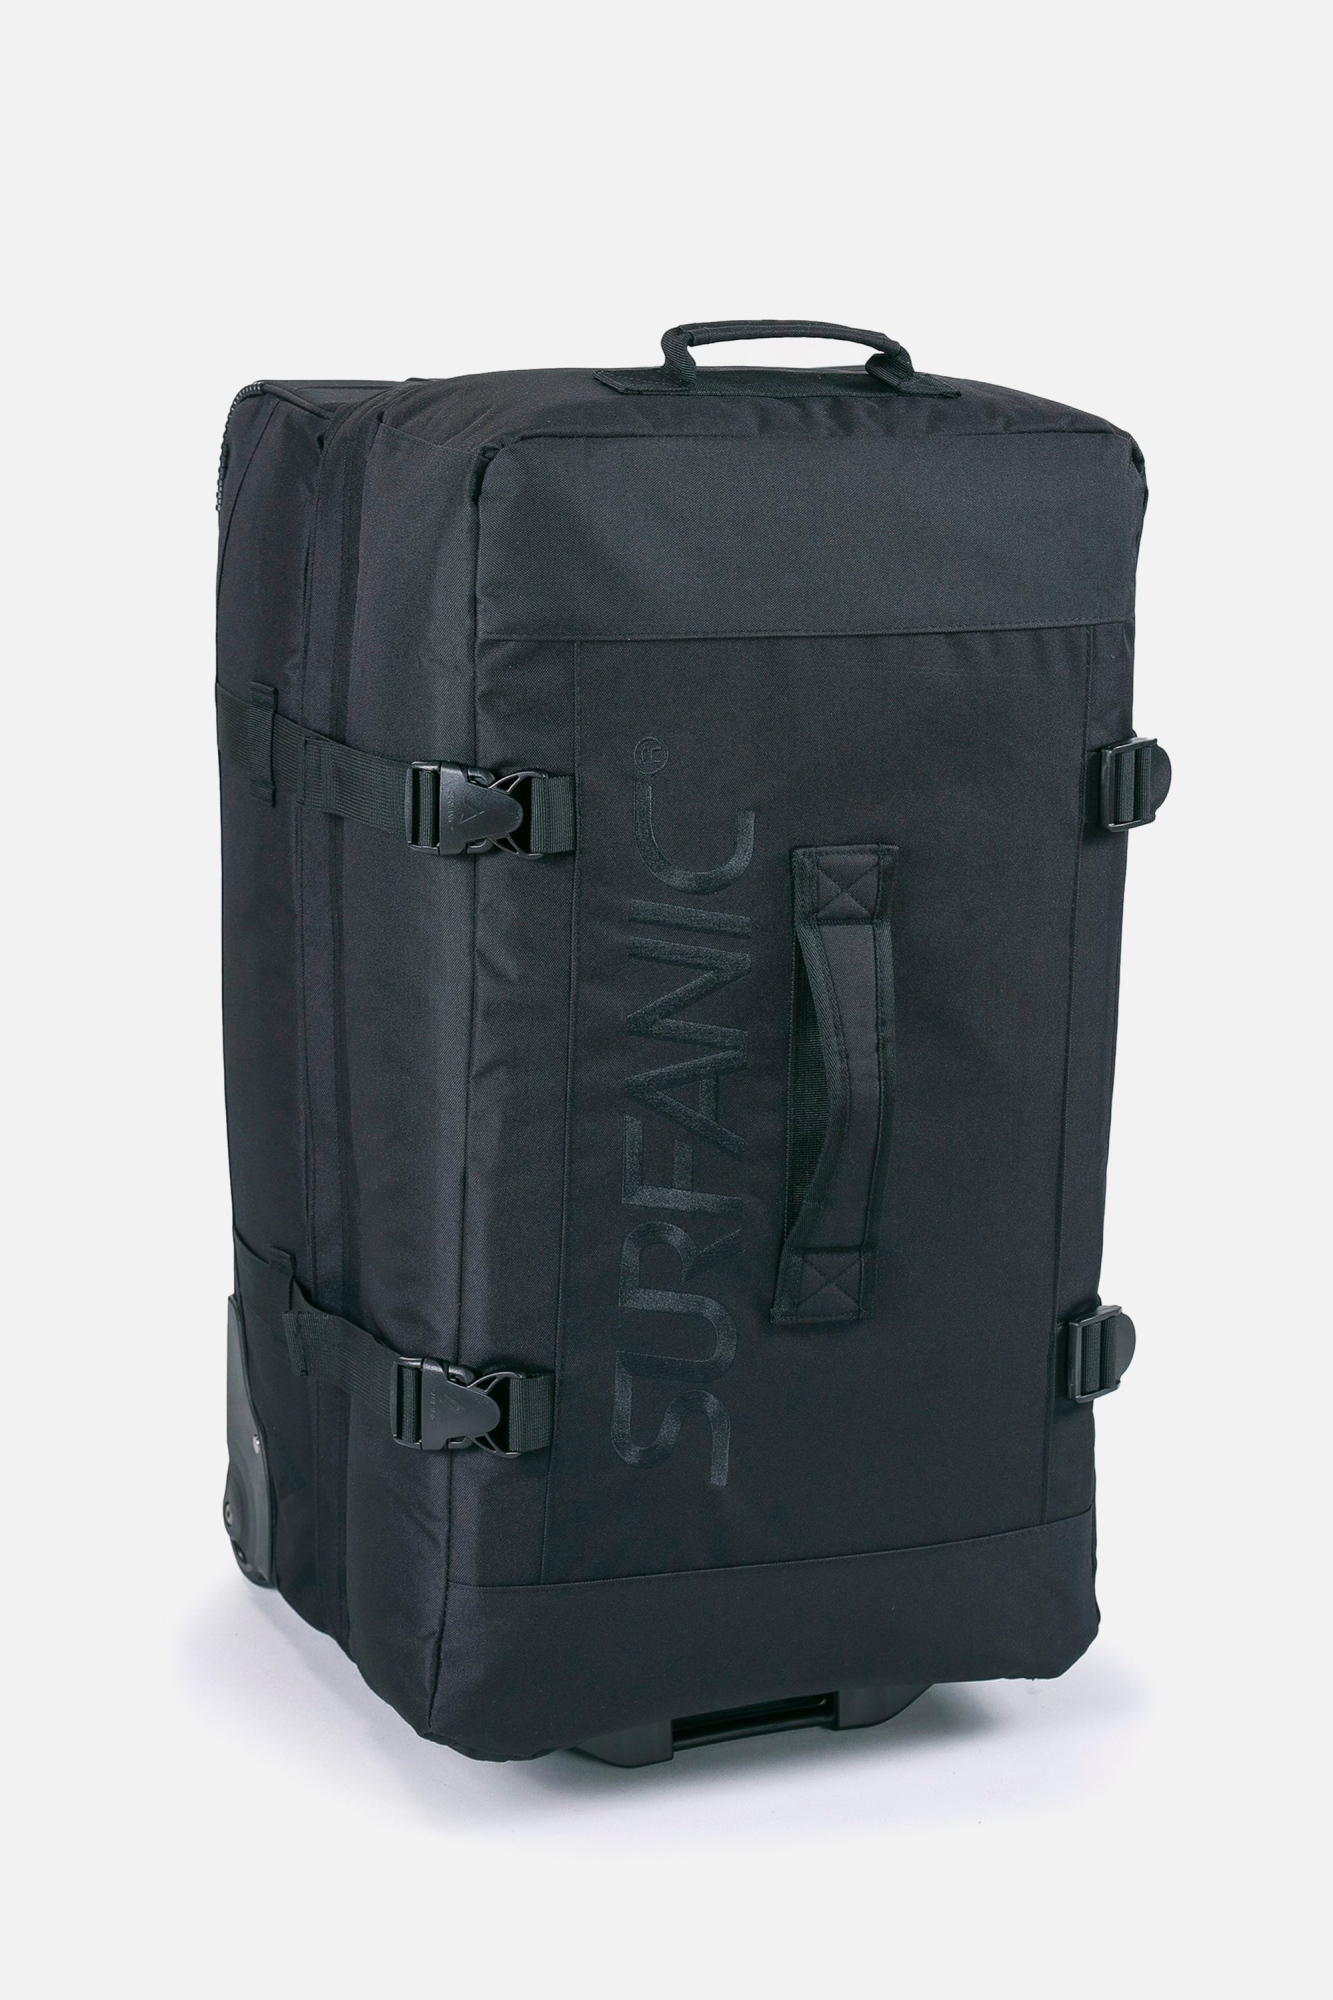 Surfanic Unisex Maxim 100 Roller Bag Black - Size: 100 Litre